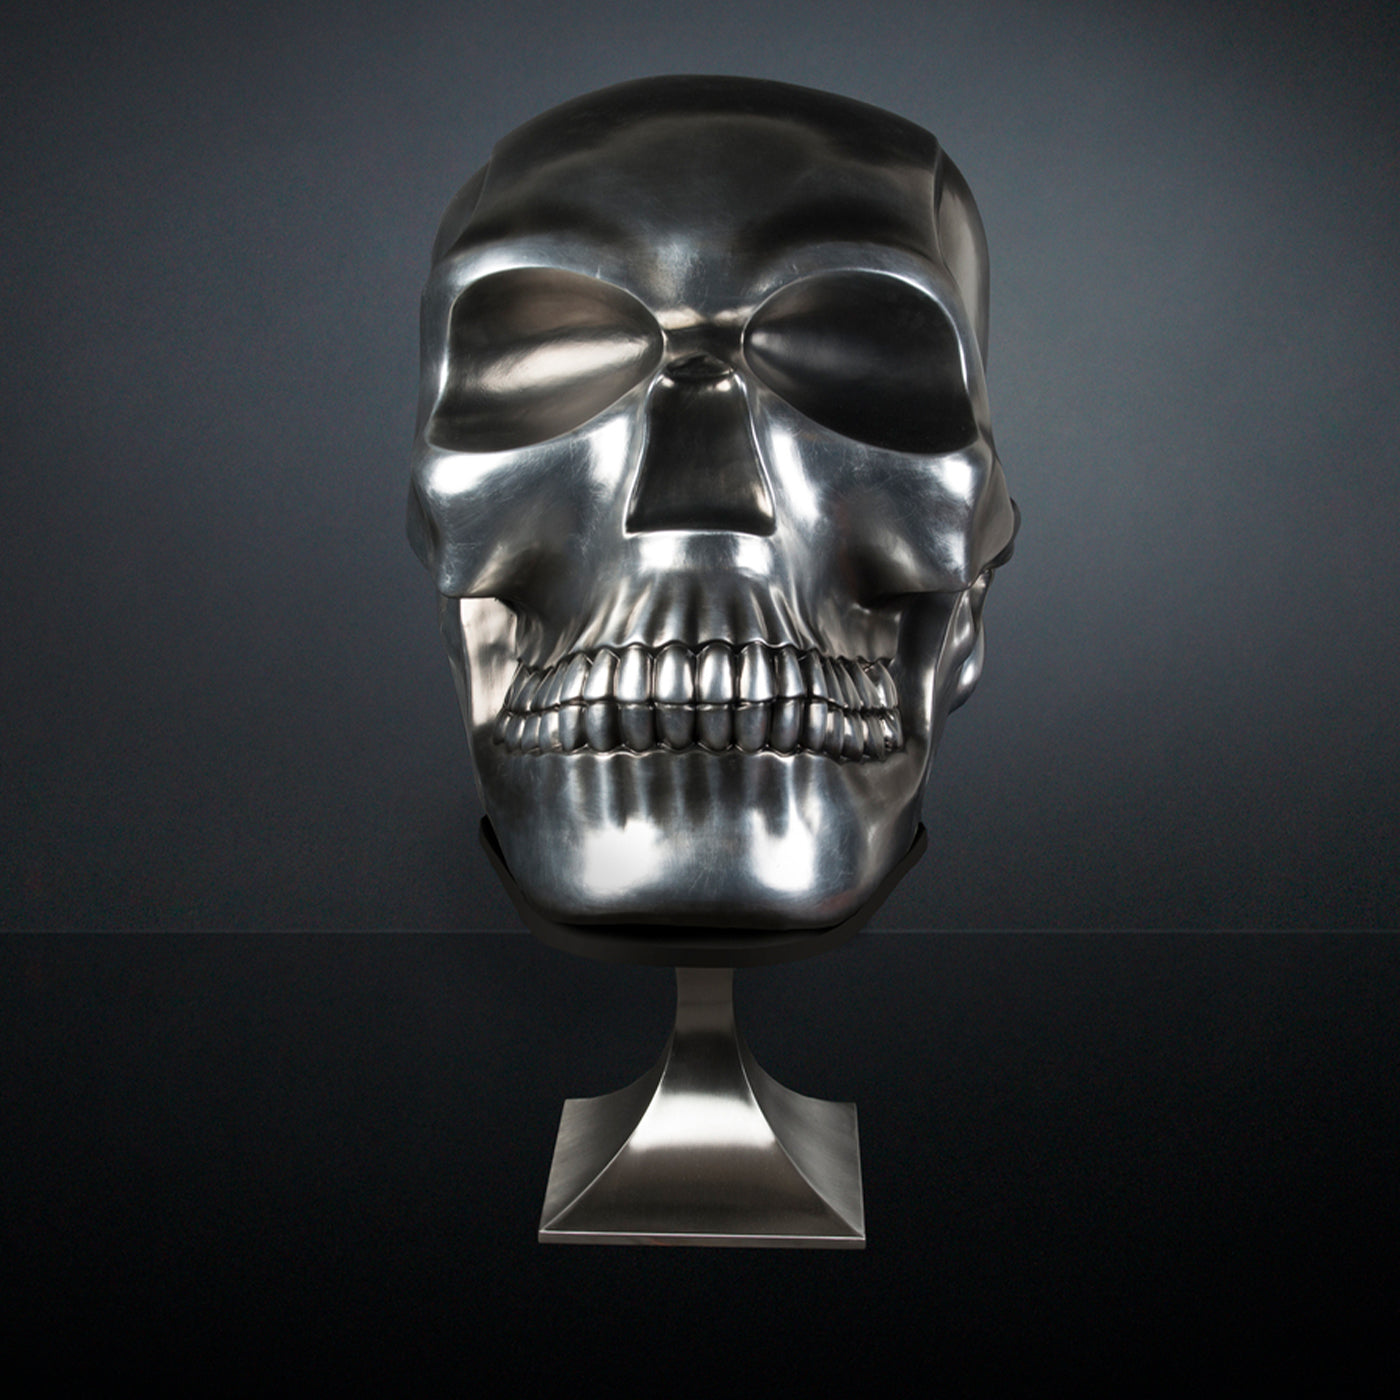 Black and Silver Skull Sculpture - Alternative view 5